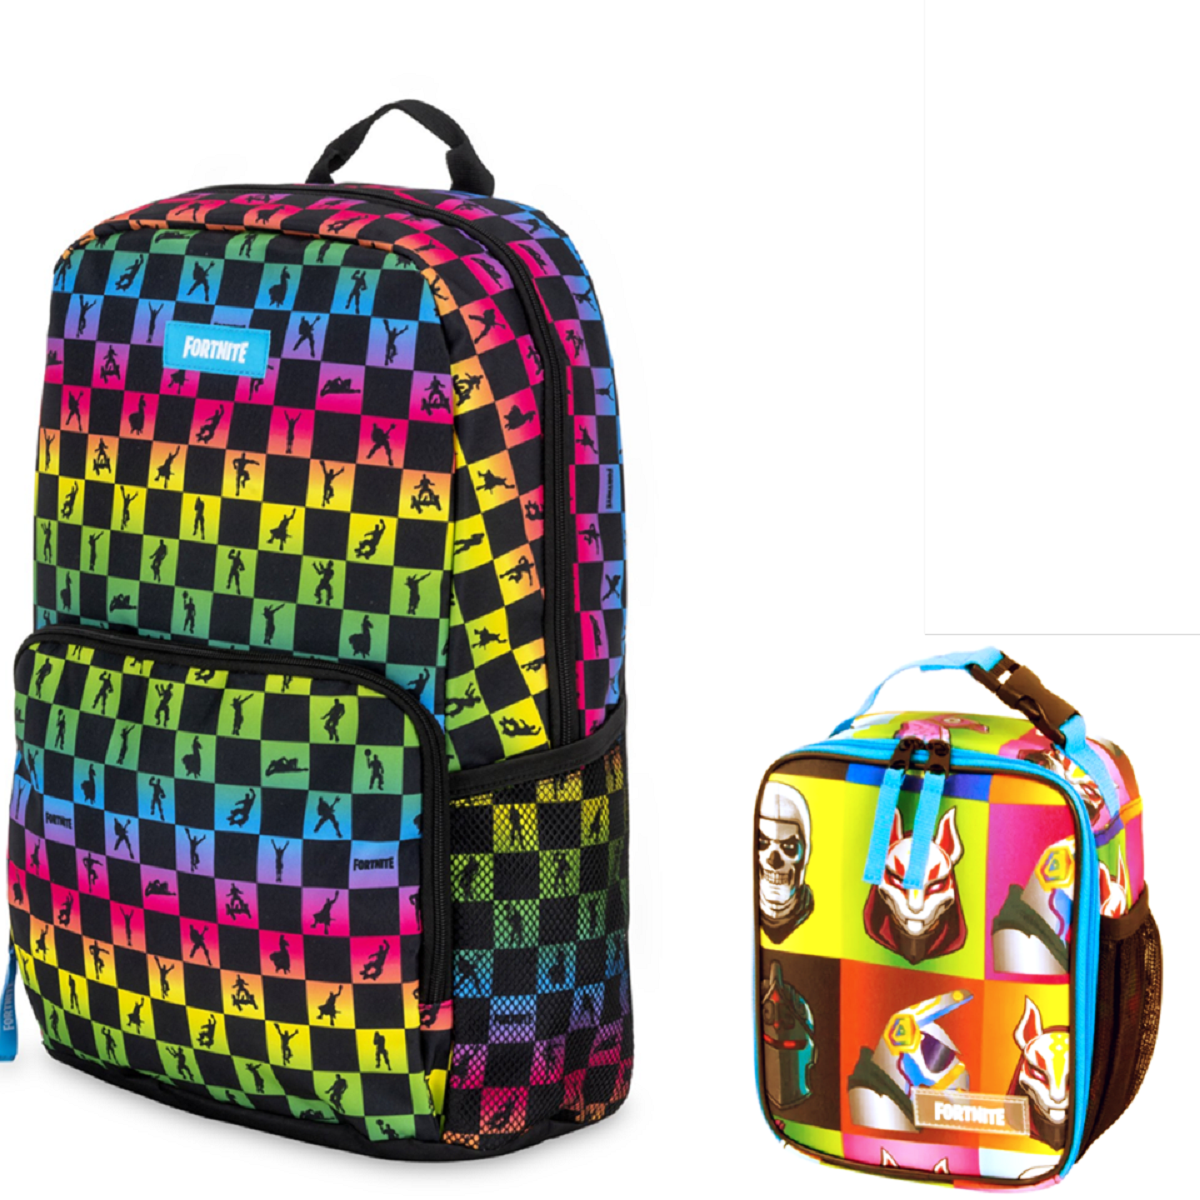 Games Fortnite Backpack Travel Backpacks 3D Prints Casual Sports School Bag Outdoor for Boys Girls